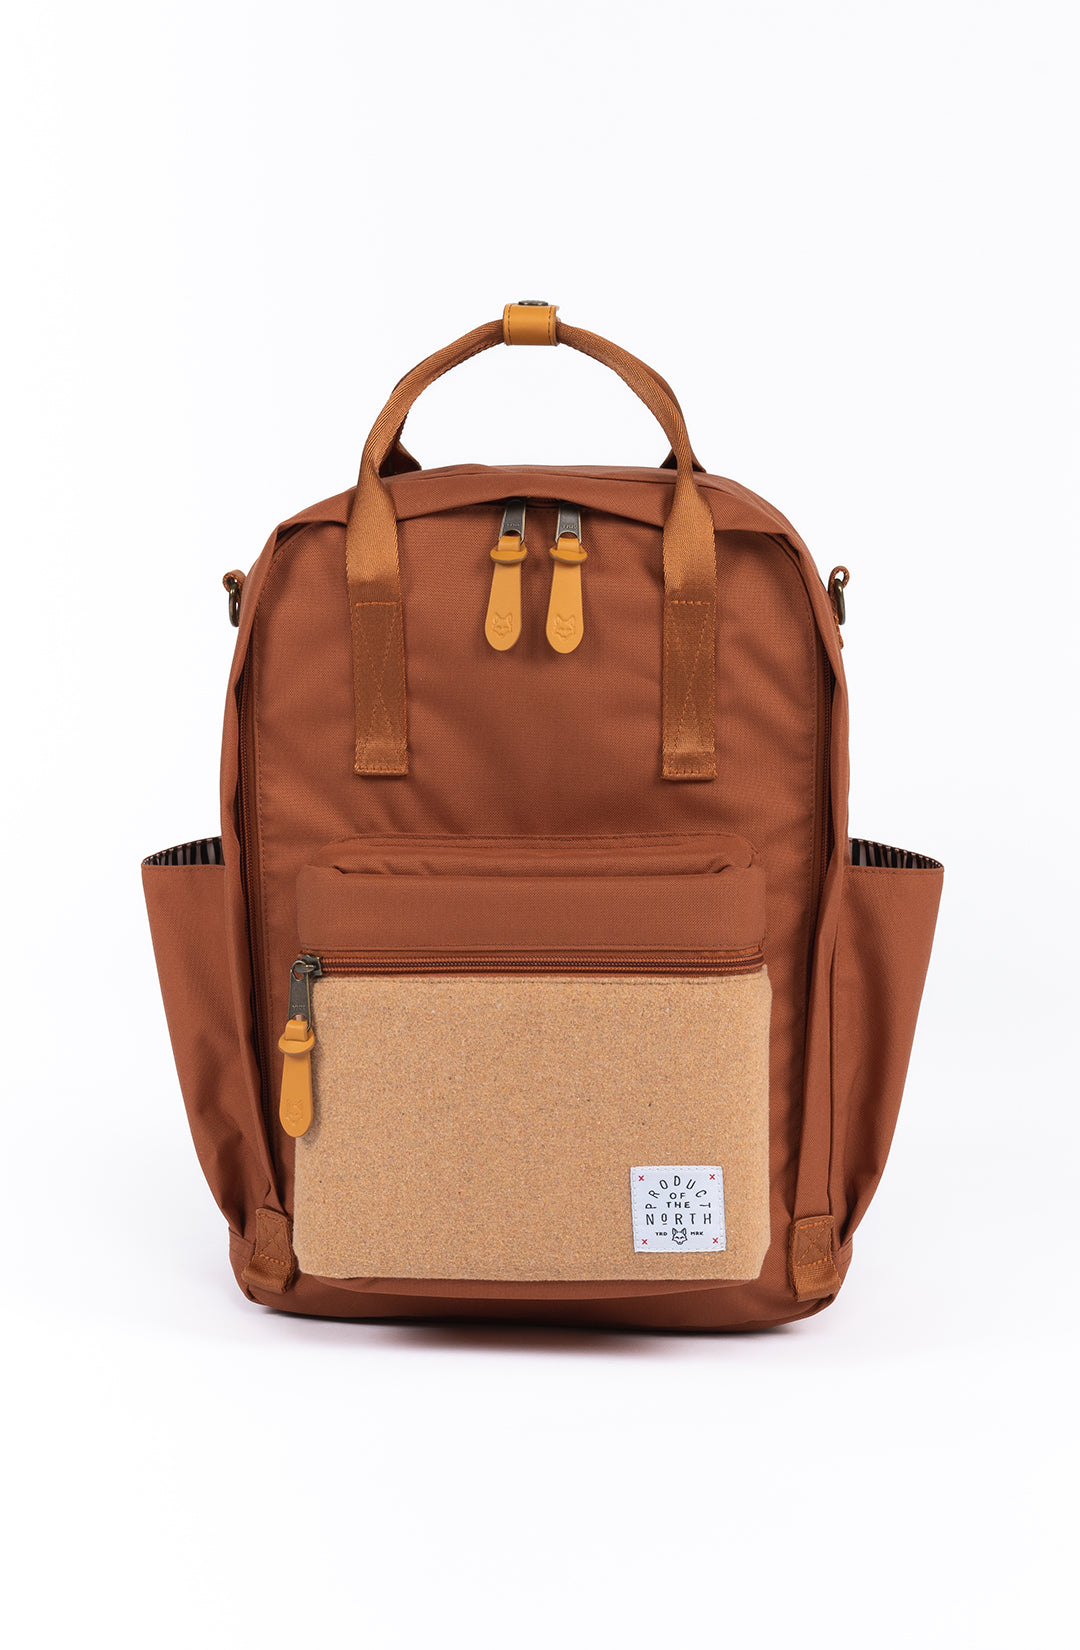 Backpack Messenger Diaper Bag